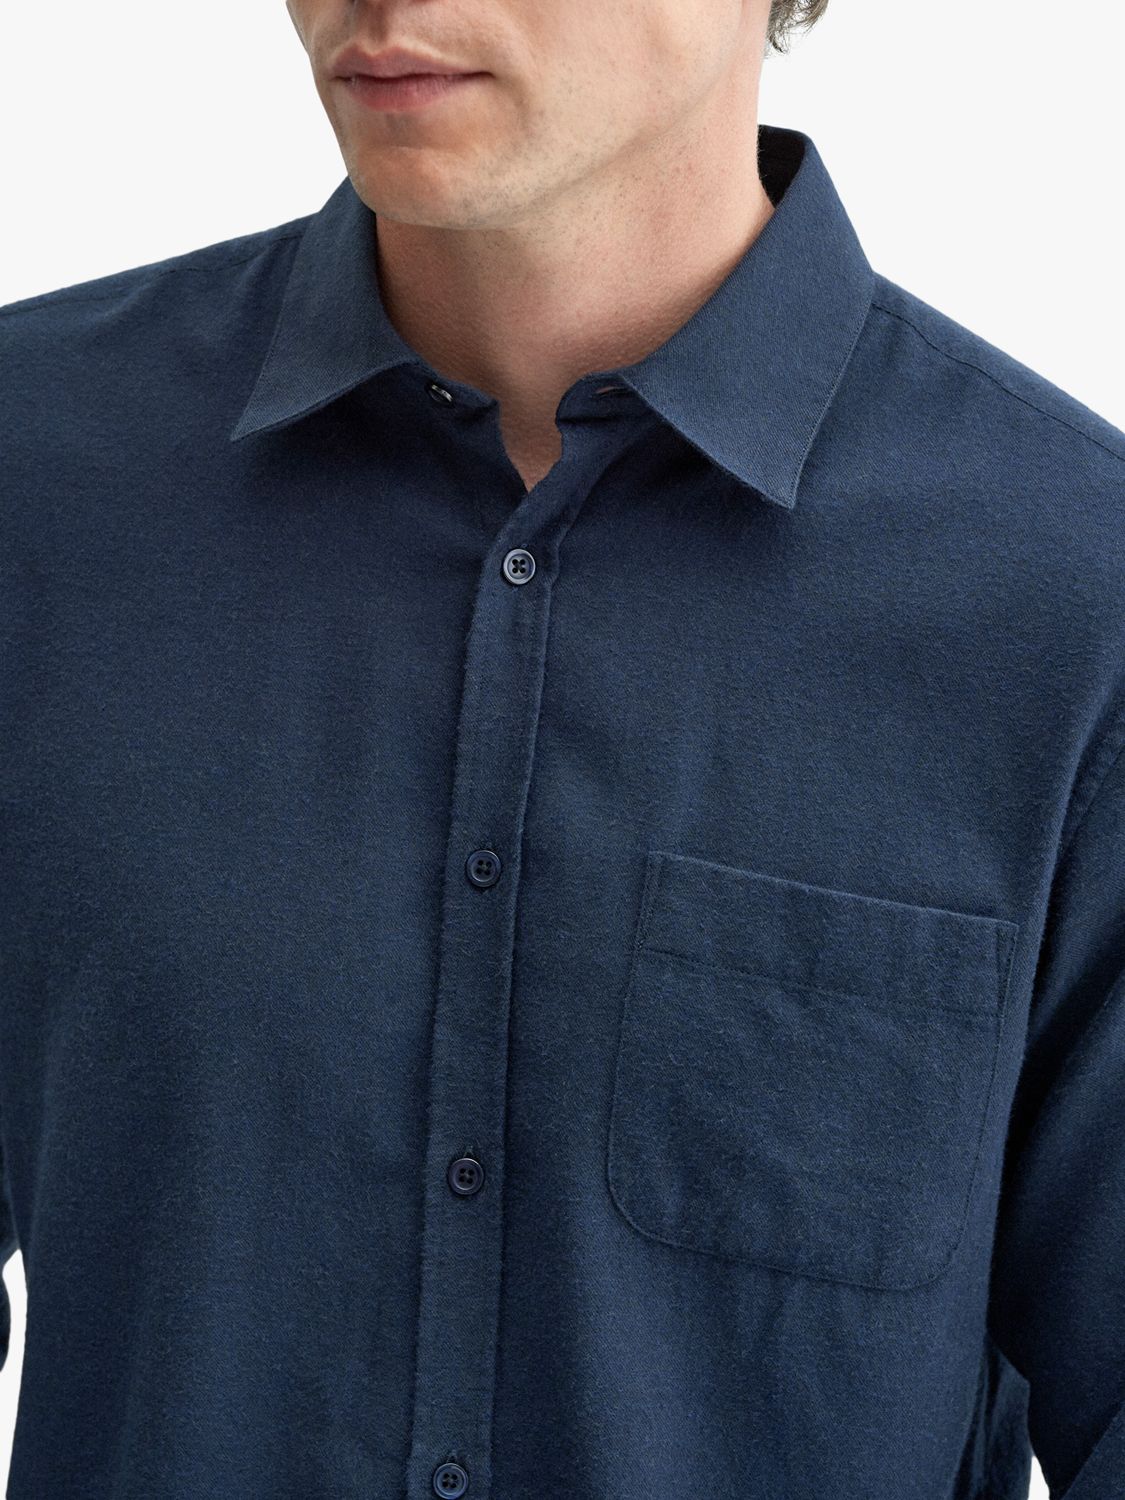 Buy Oliver Sweeney Long Sleeve Plain Shirt Online at johnlewis.com